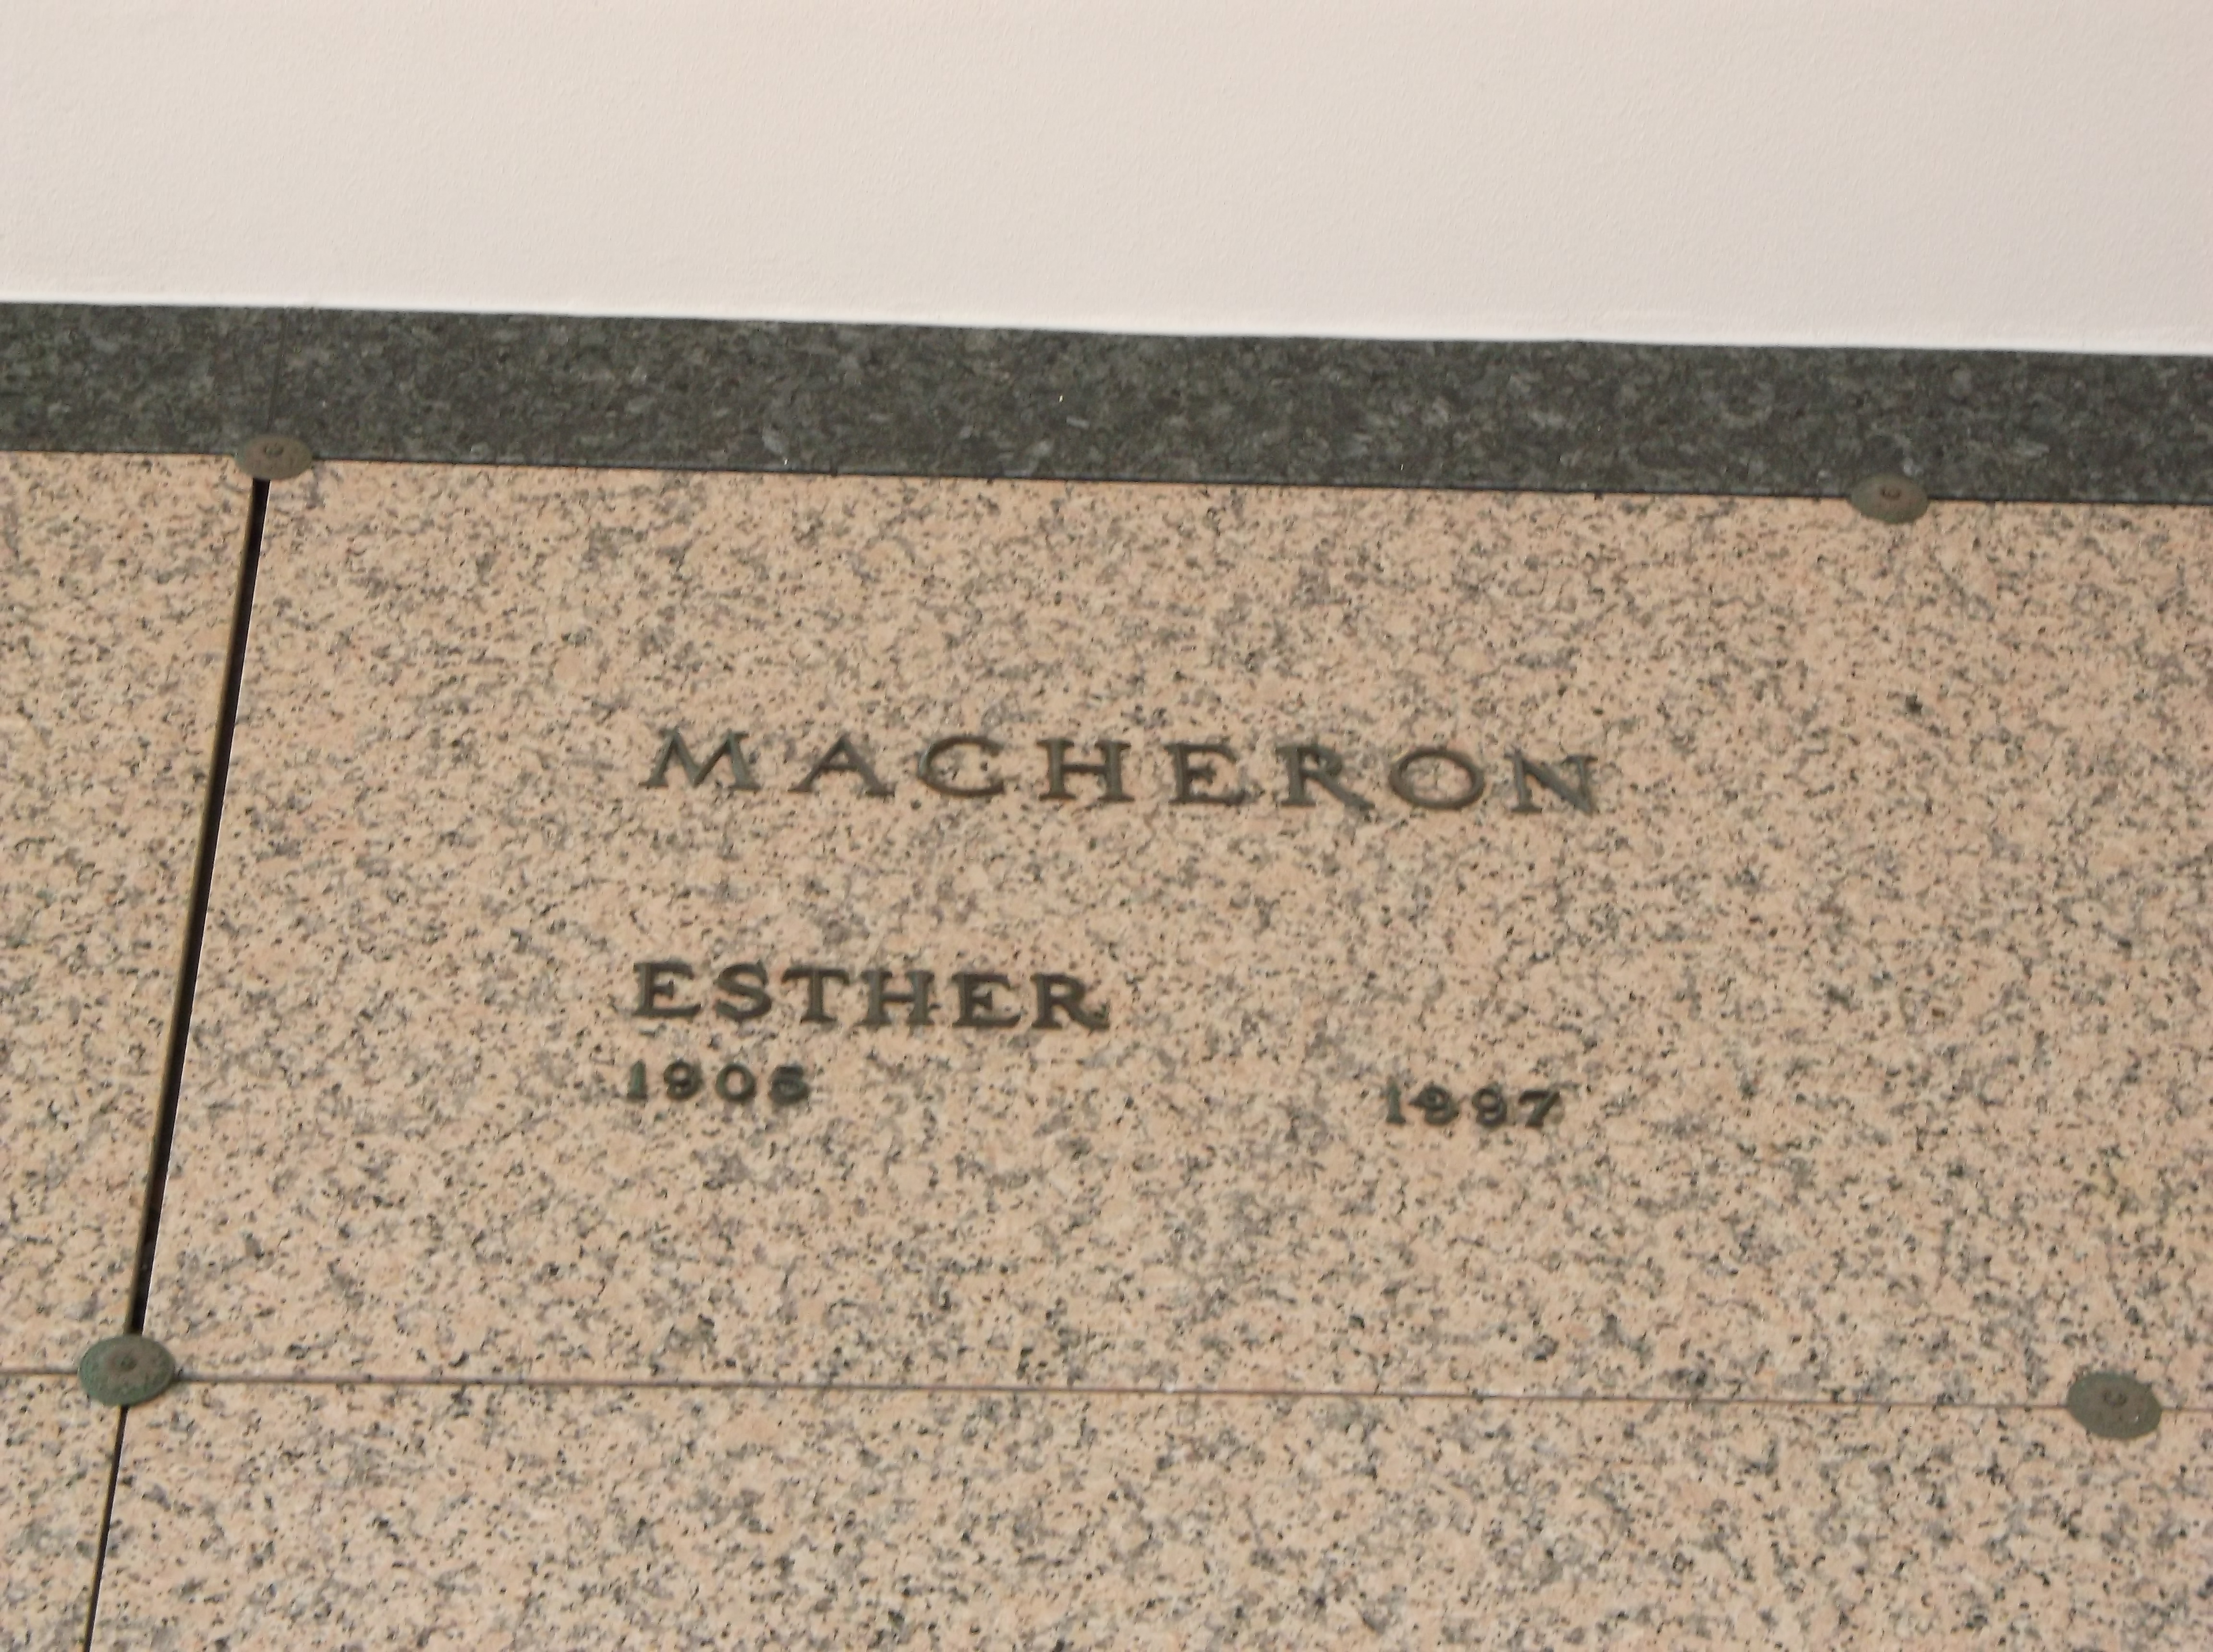 Esther Macheron